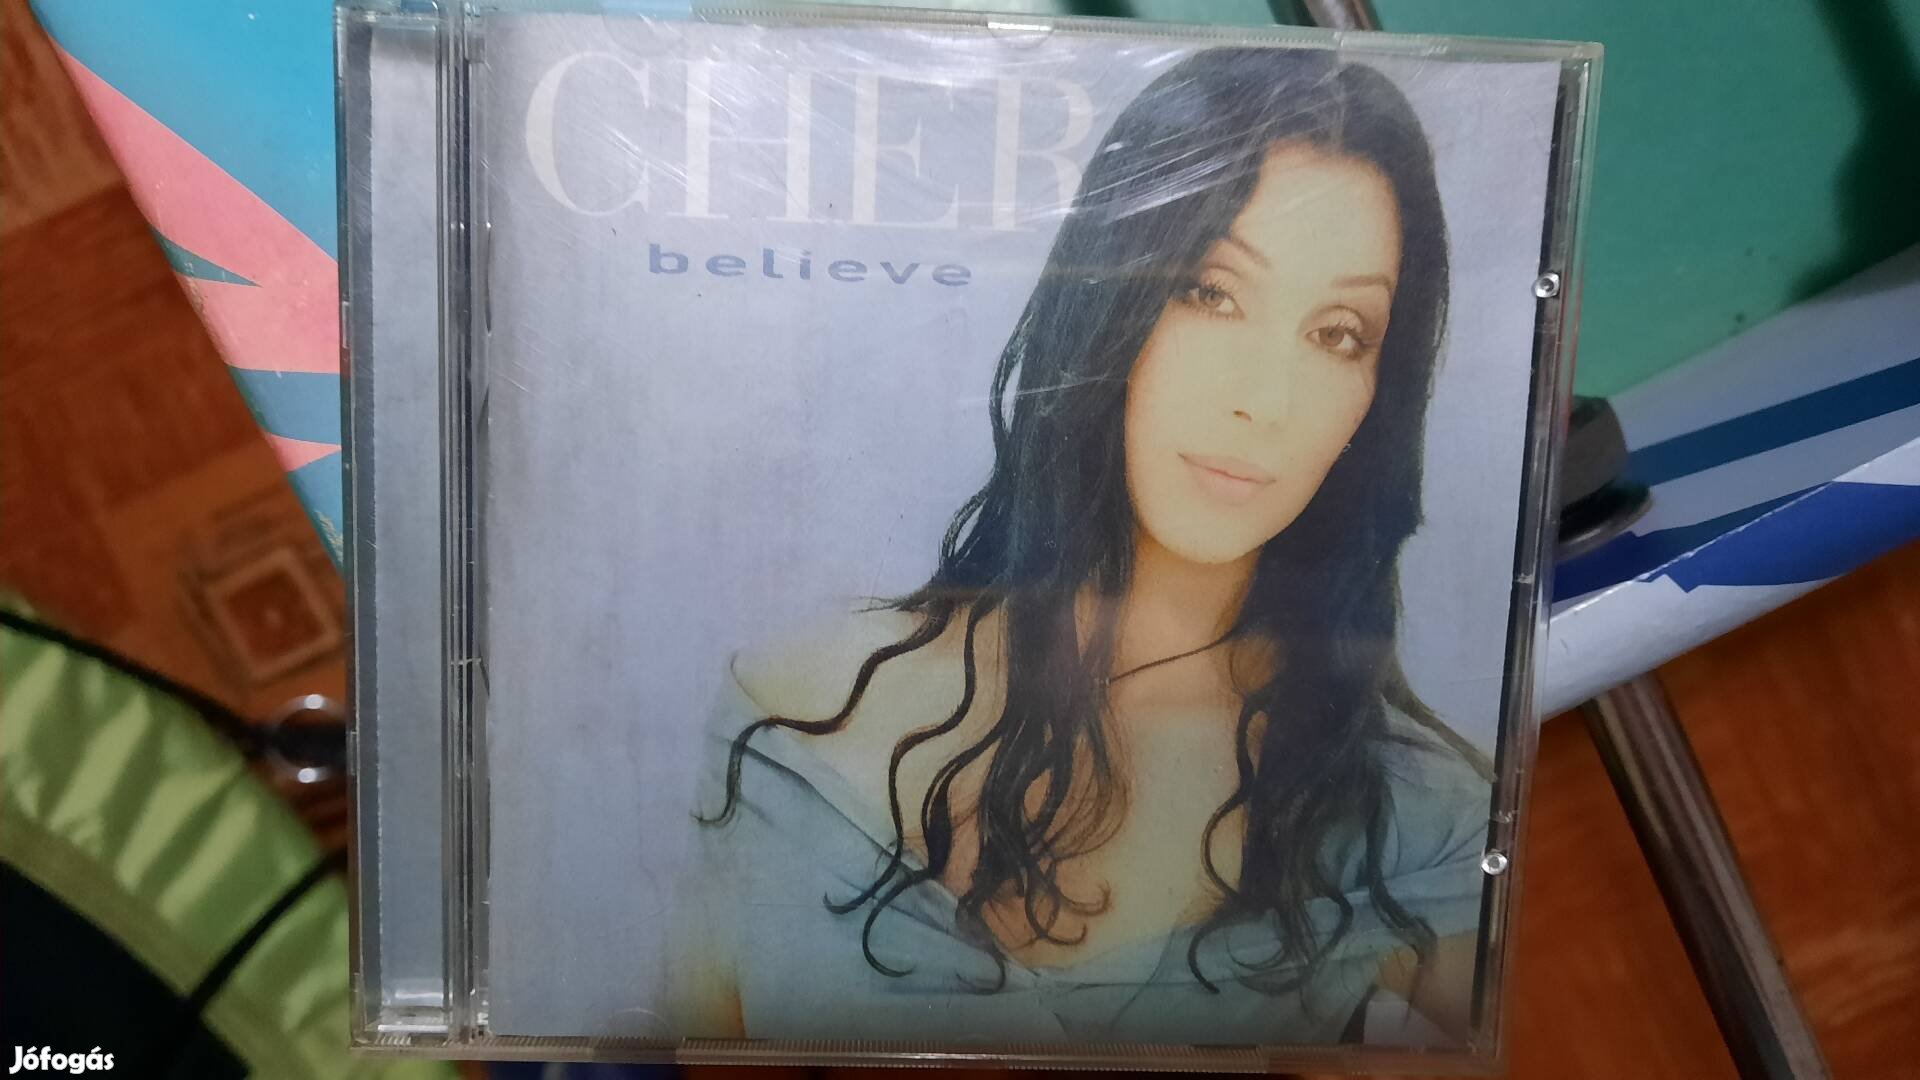 Cher Believe cd